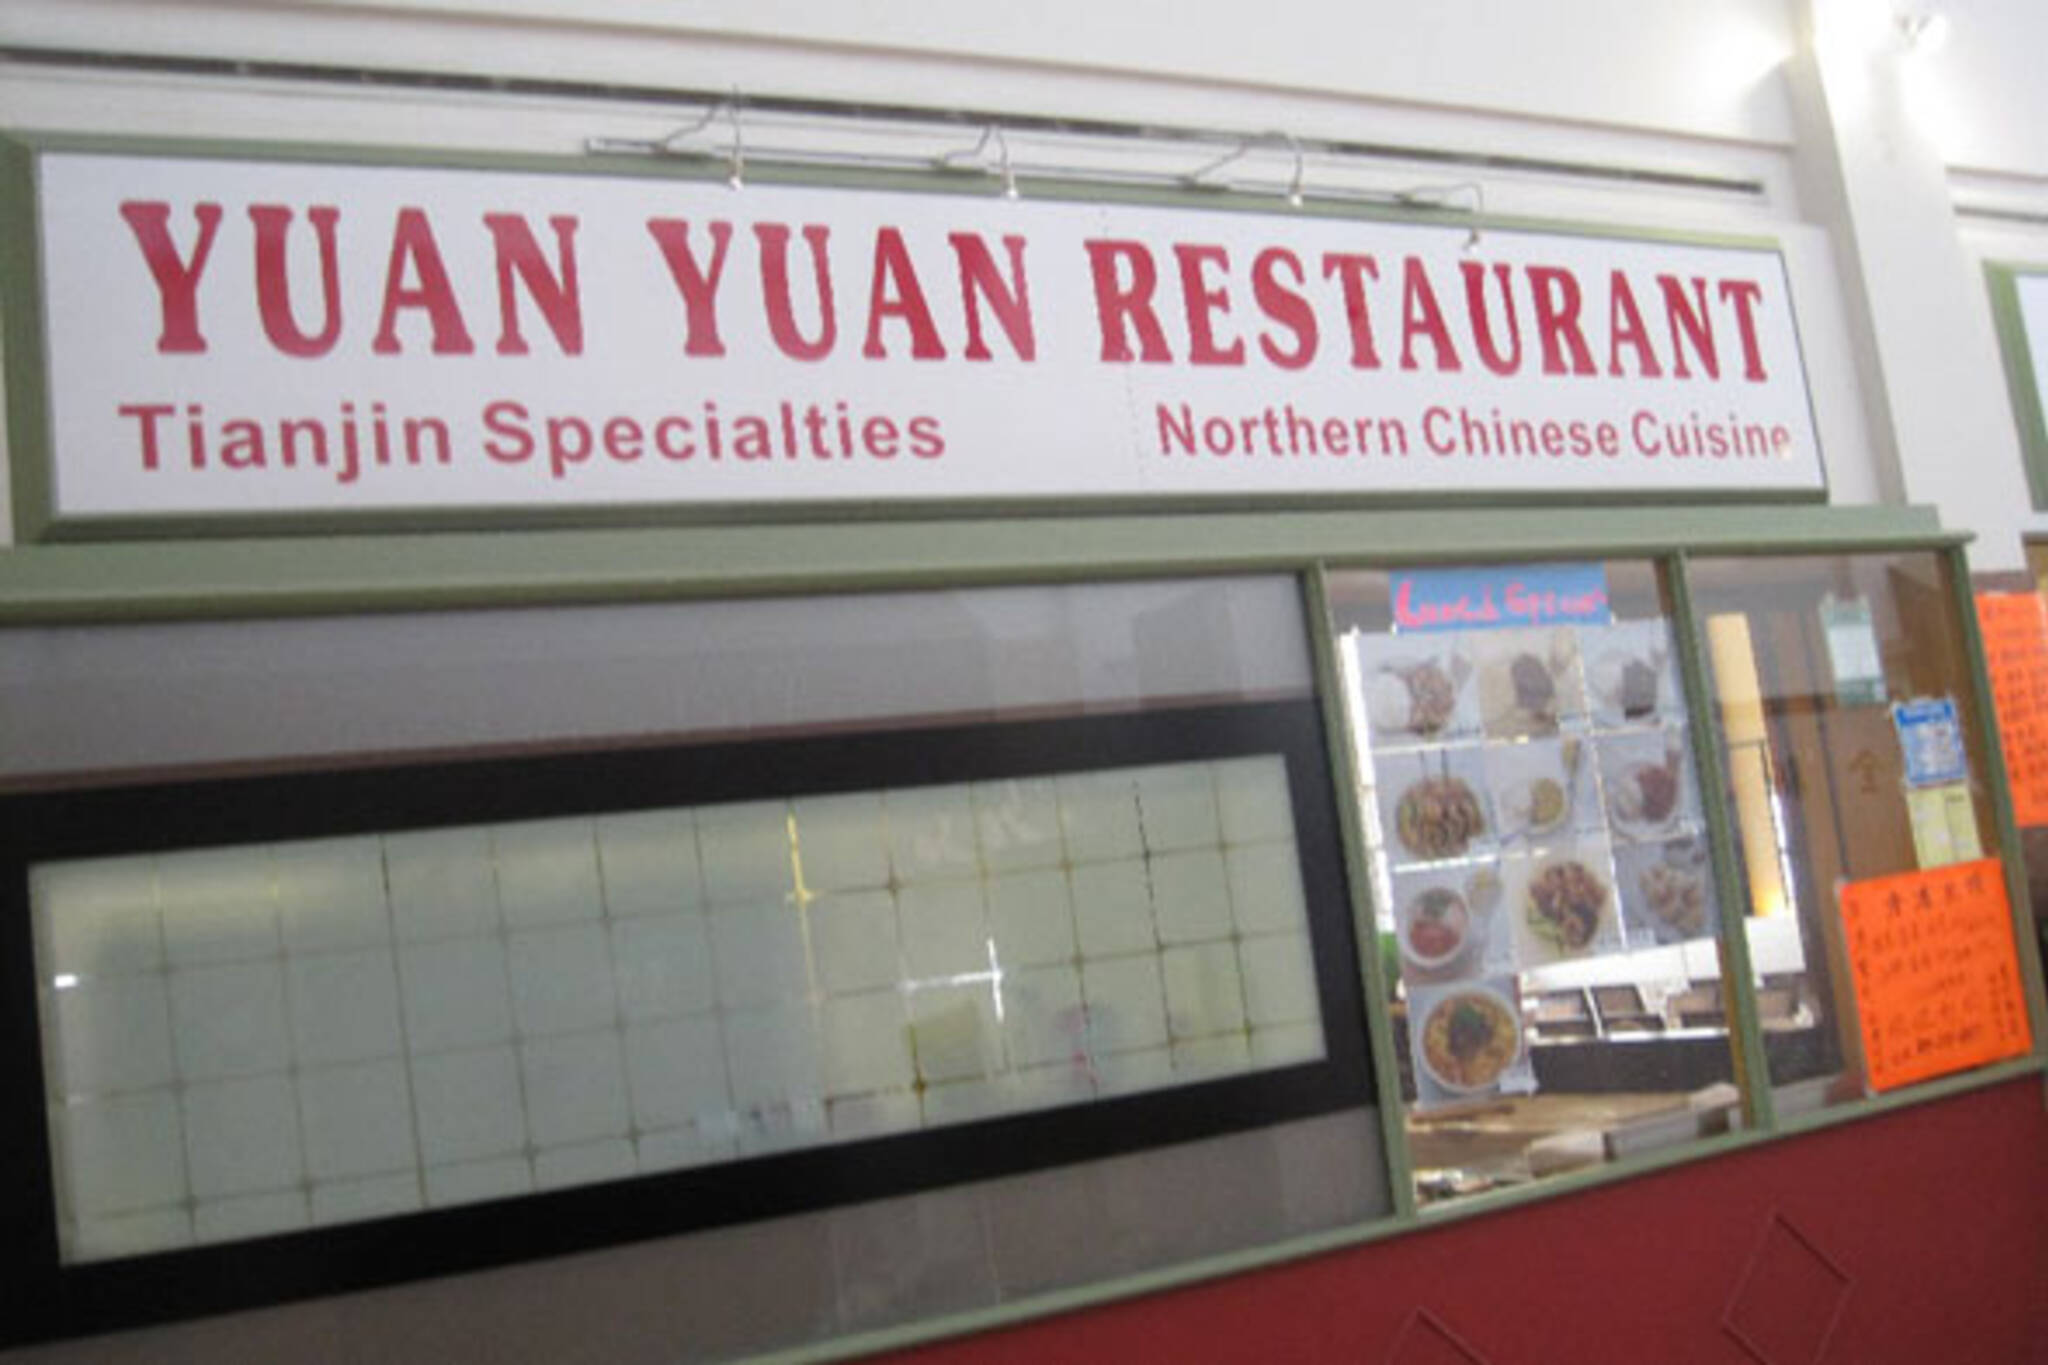 Yuan Yuan Restaurant